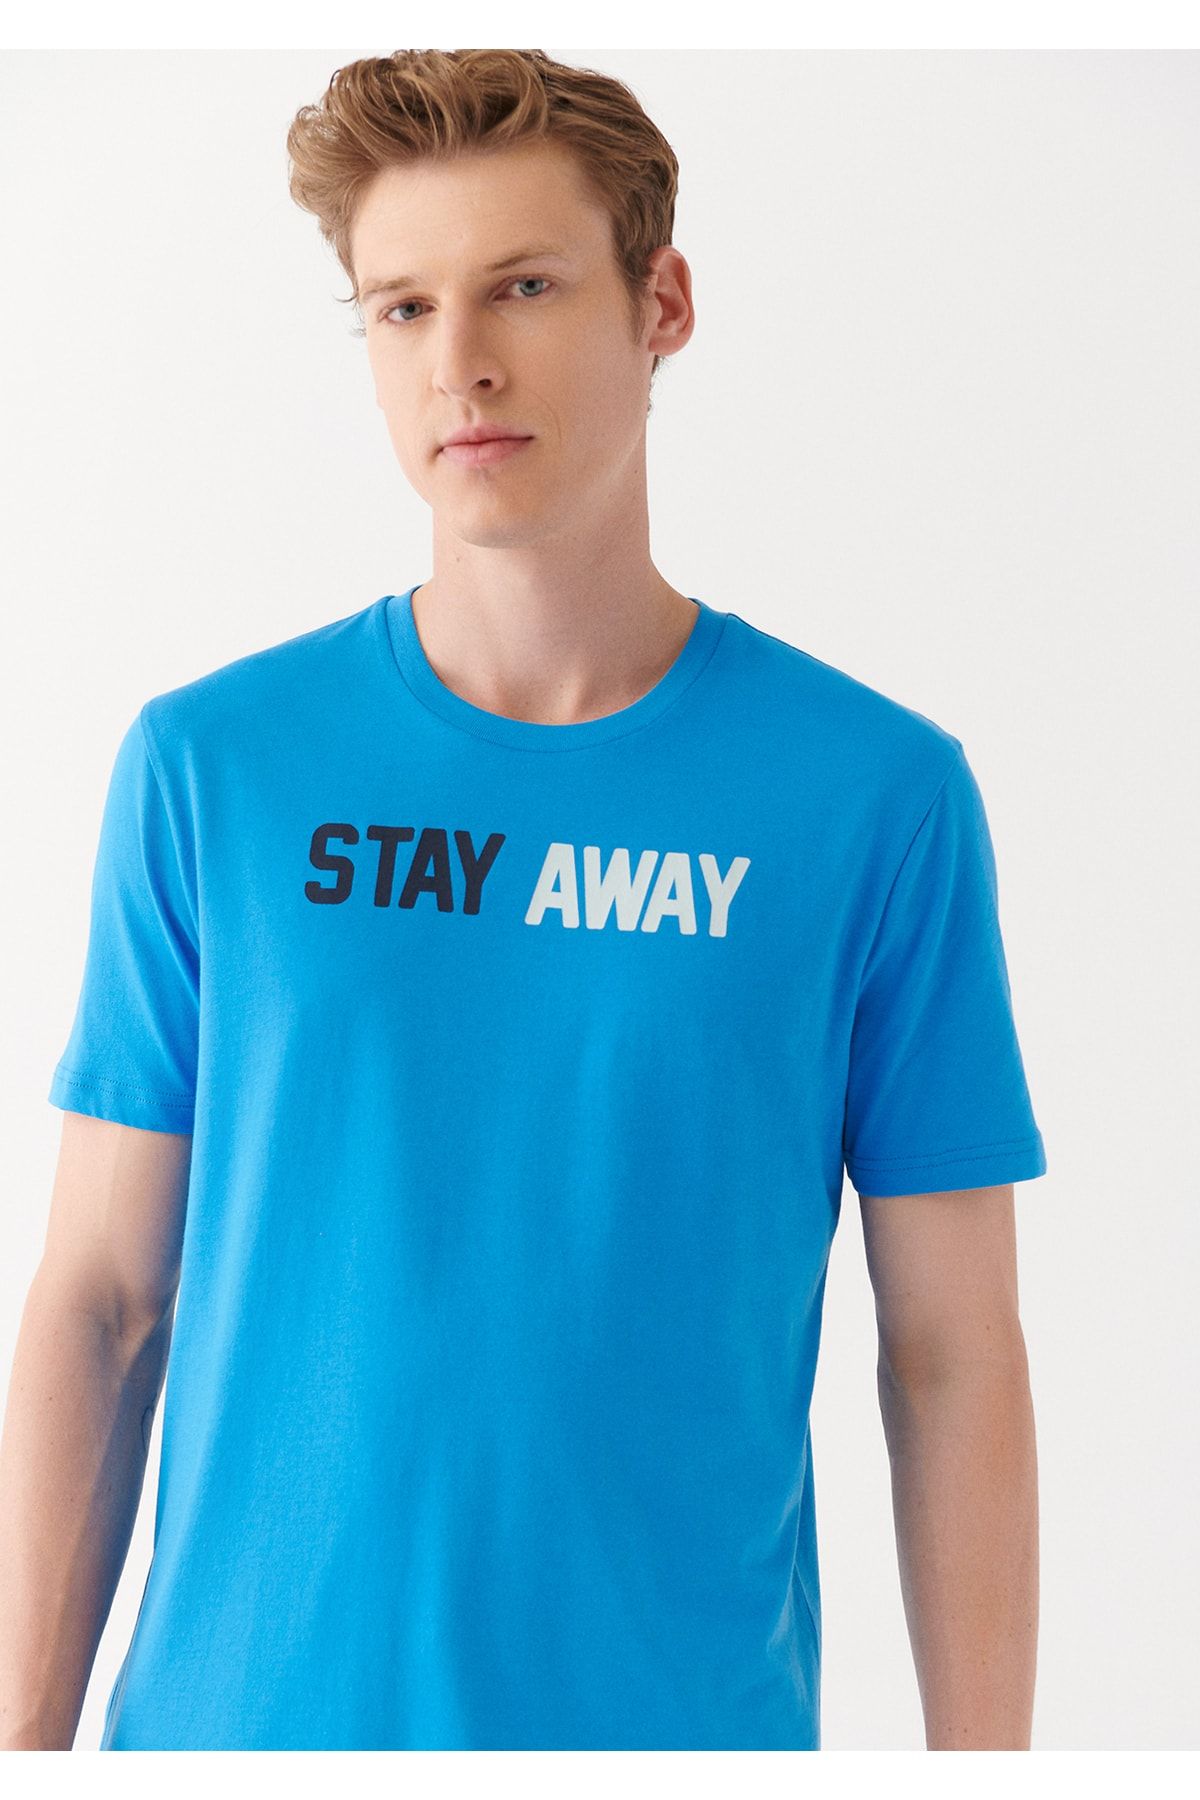 Mavi تی شرت چاپ شده تناسب باریک / برش 8810567-70772